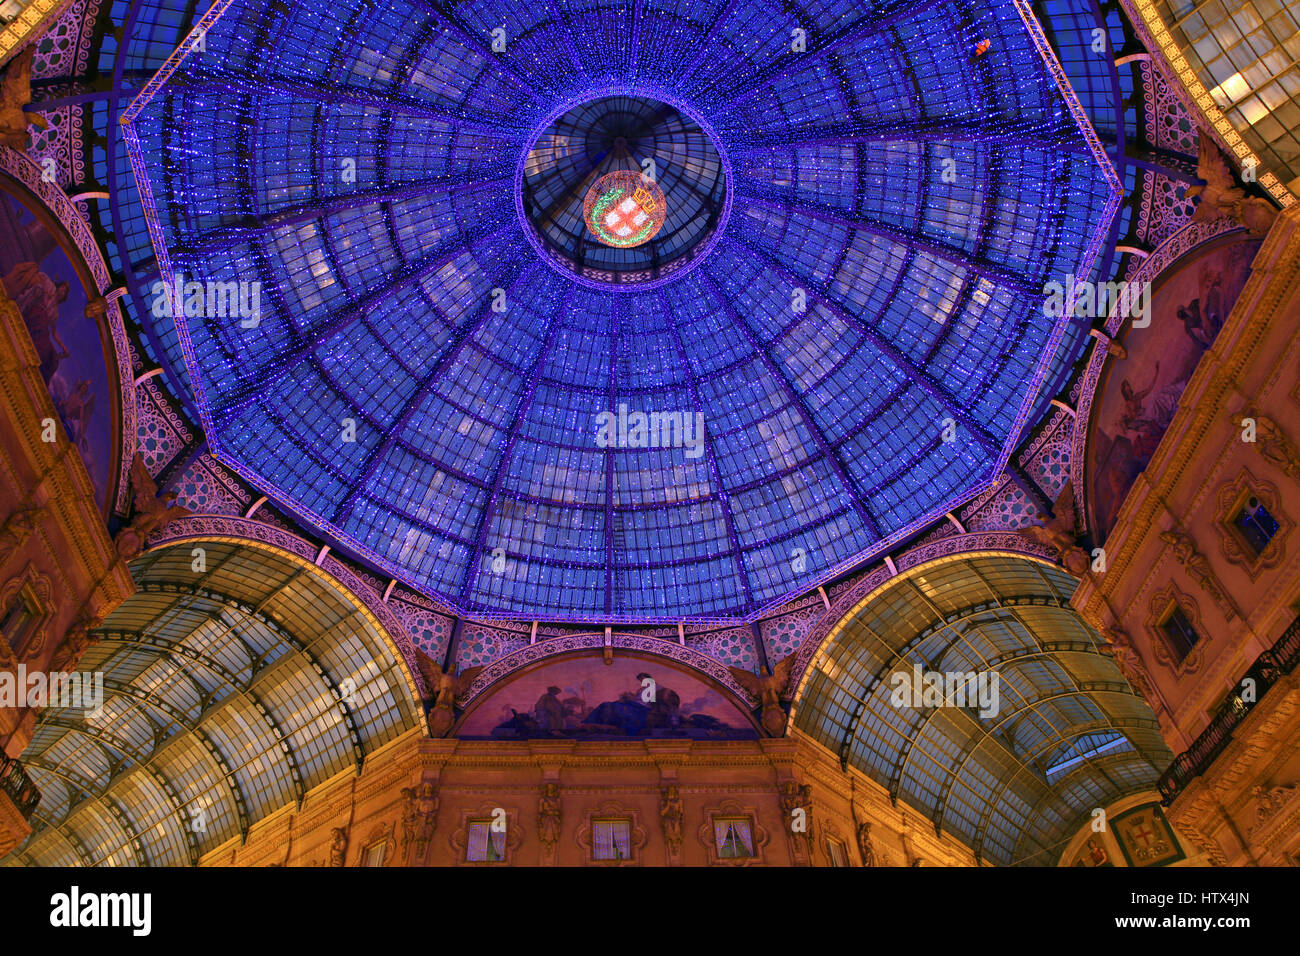 Galleria Vittorio Emanuele II in Milan, Italy Stock Photo